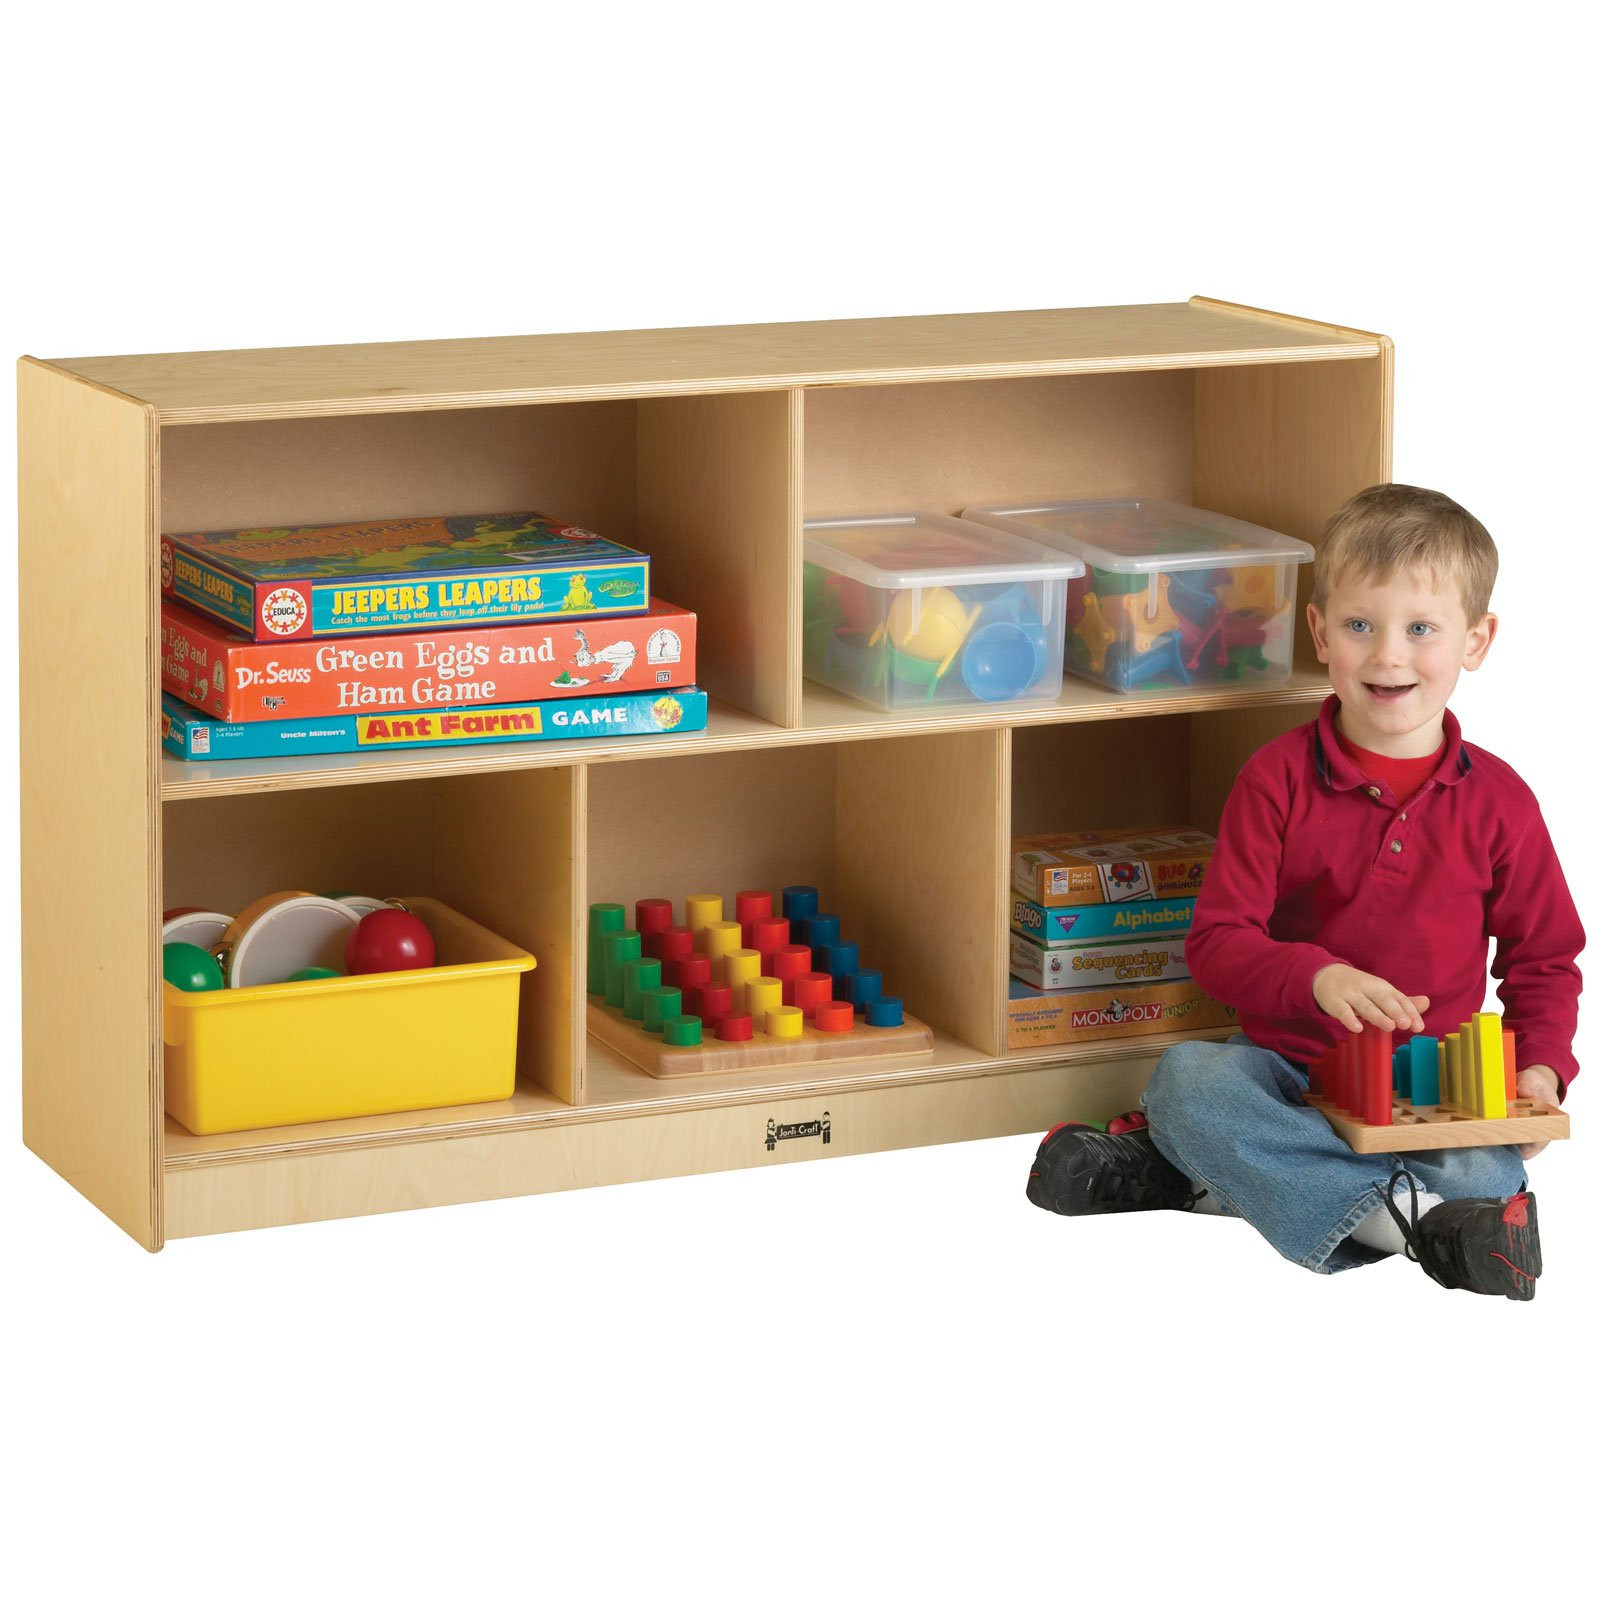 Childrens Bookcases And Storage
 Jonti Craft Low Single Storage Bookcase Kids Bookcases